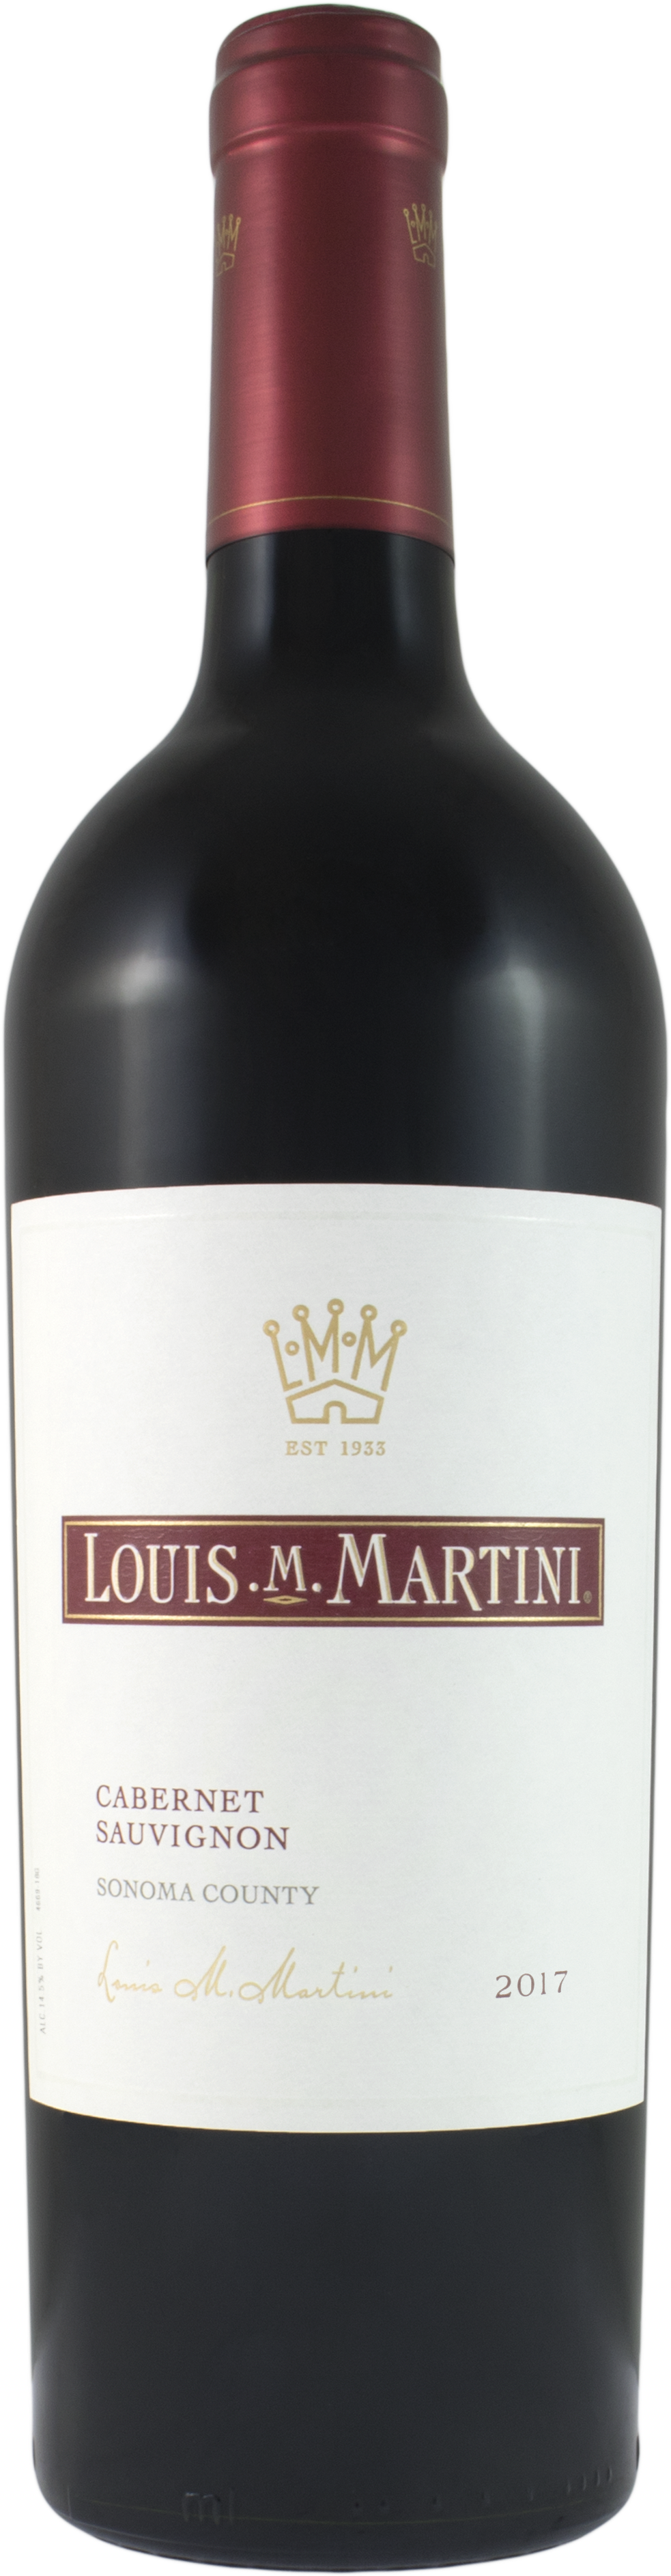 images/wine/Red Wine/Louis.M.Martini Cabernet Sauvignon .png